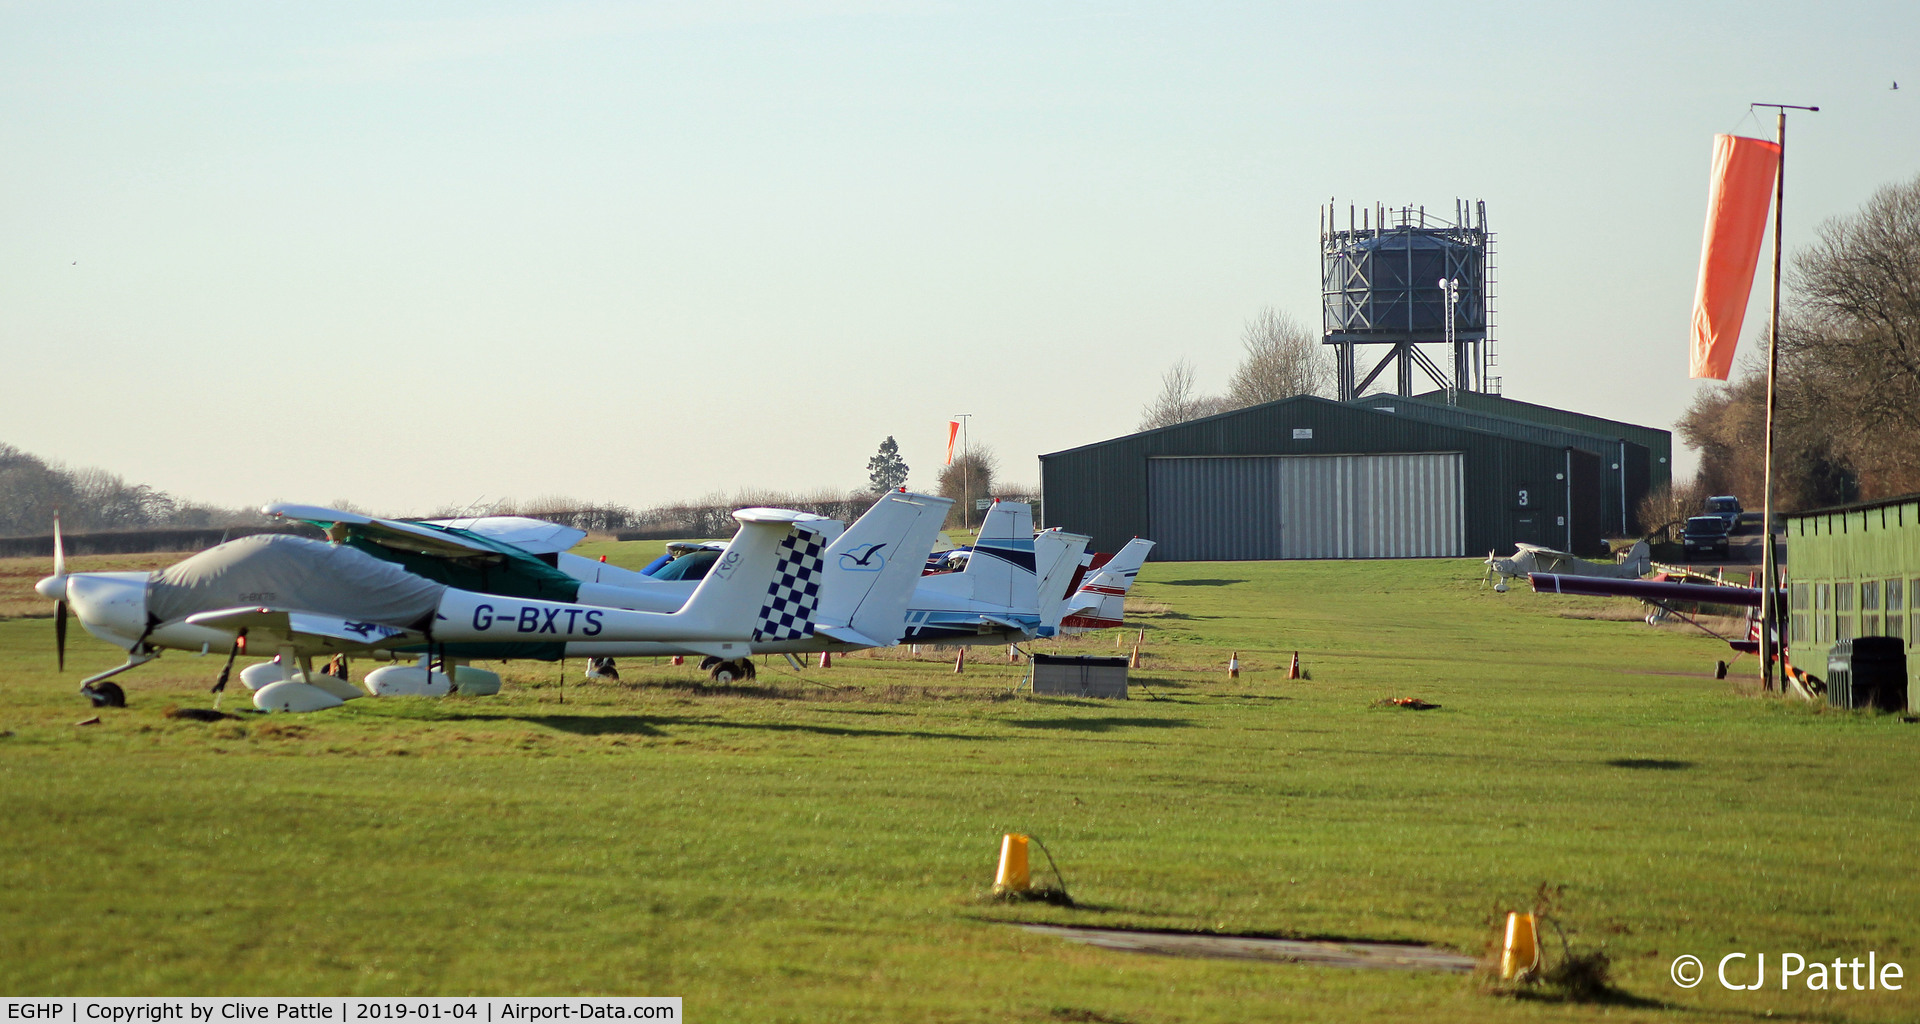 Popham Airfield Airport, Popham, England United Kingdom (EGHP) - View @ Popham